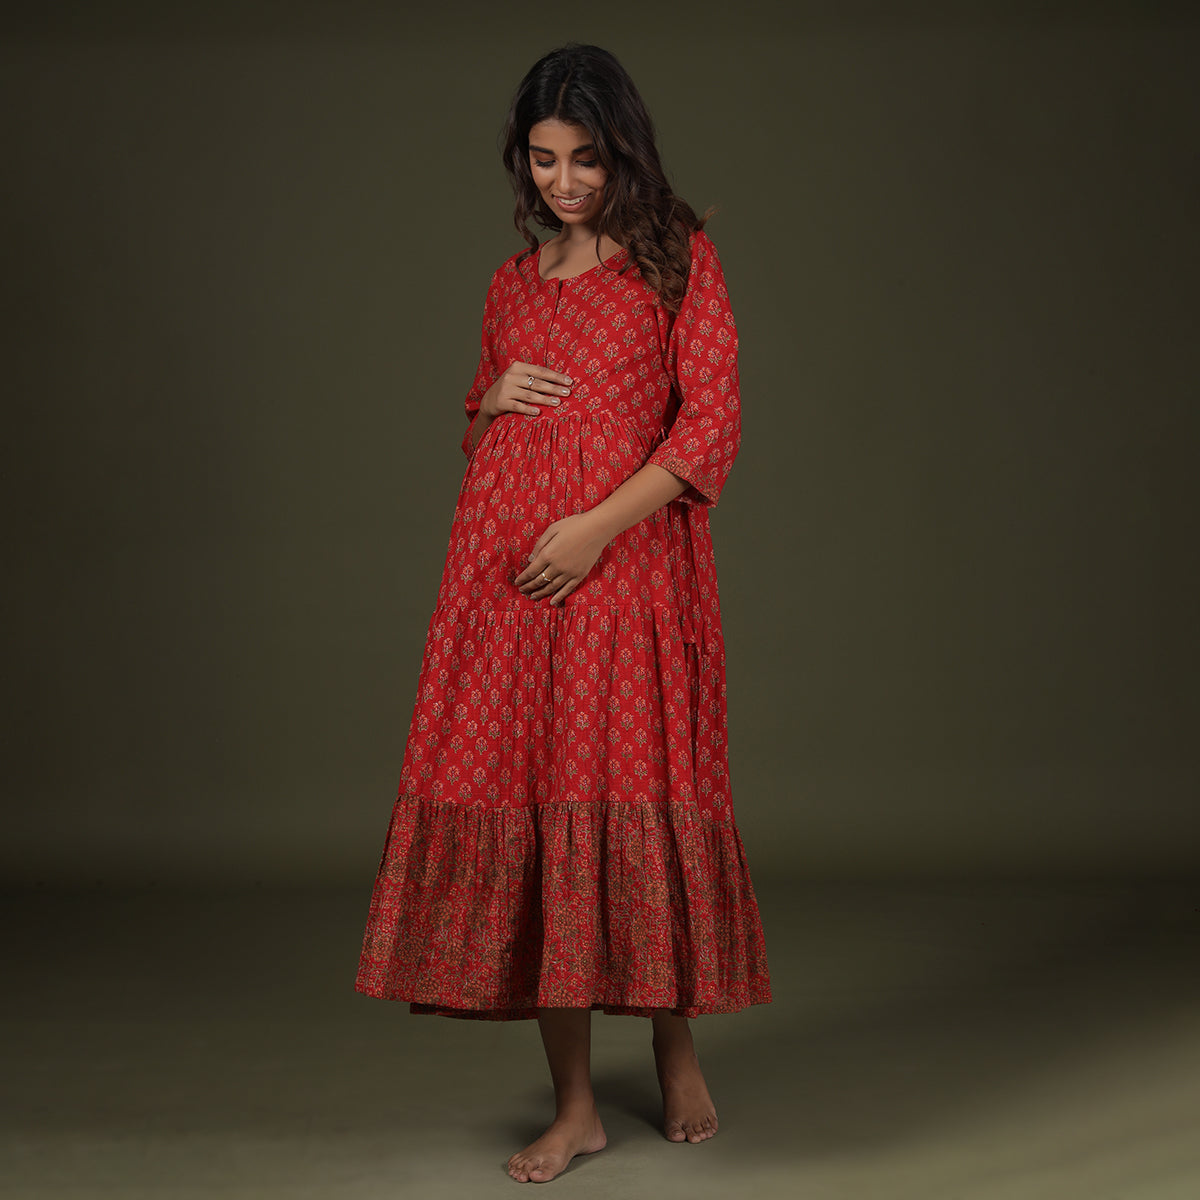 Floral Print on Red Maternity Dress Jisora Jaipur